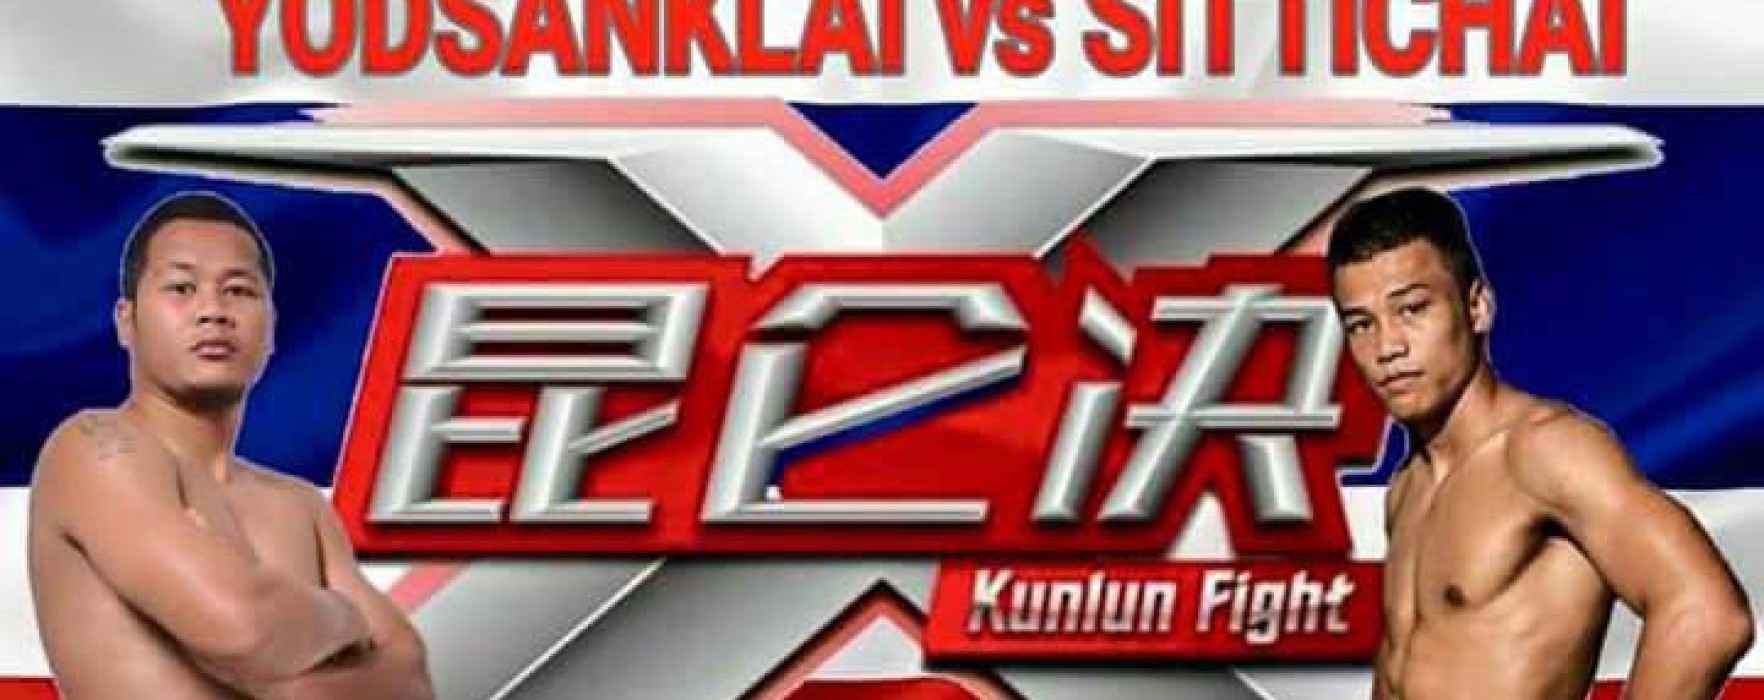 Match del secolo: Yodsanklai vs Sittichai – Kunlun Fight 35: Final 8 – 19/12/15